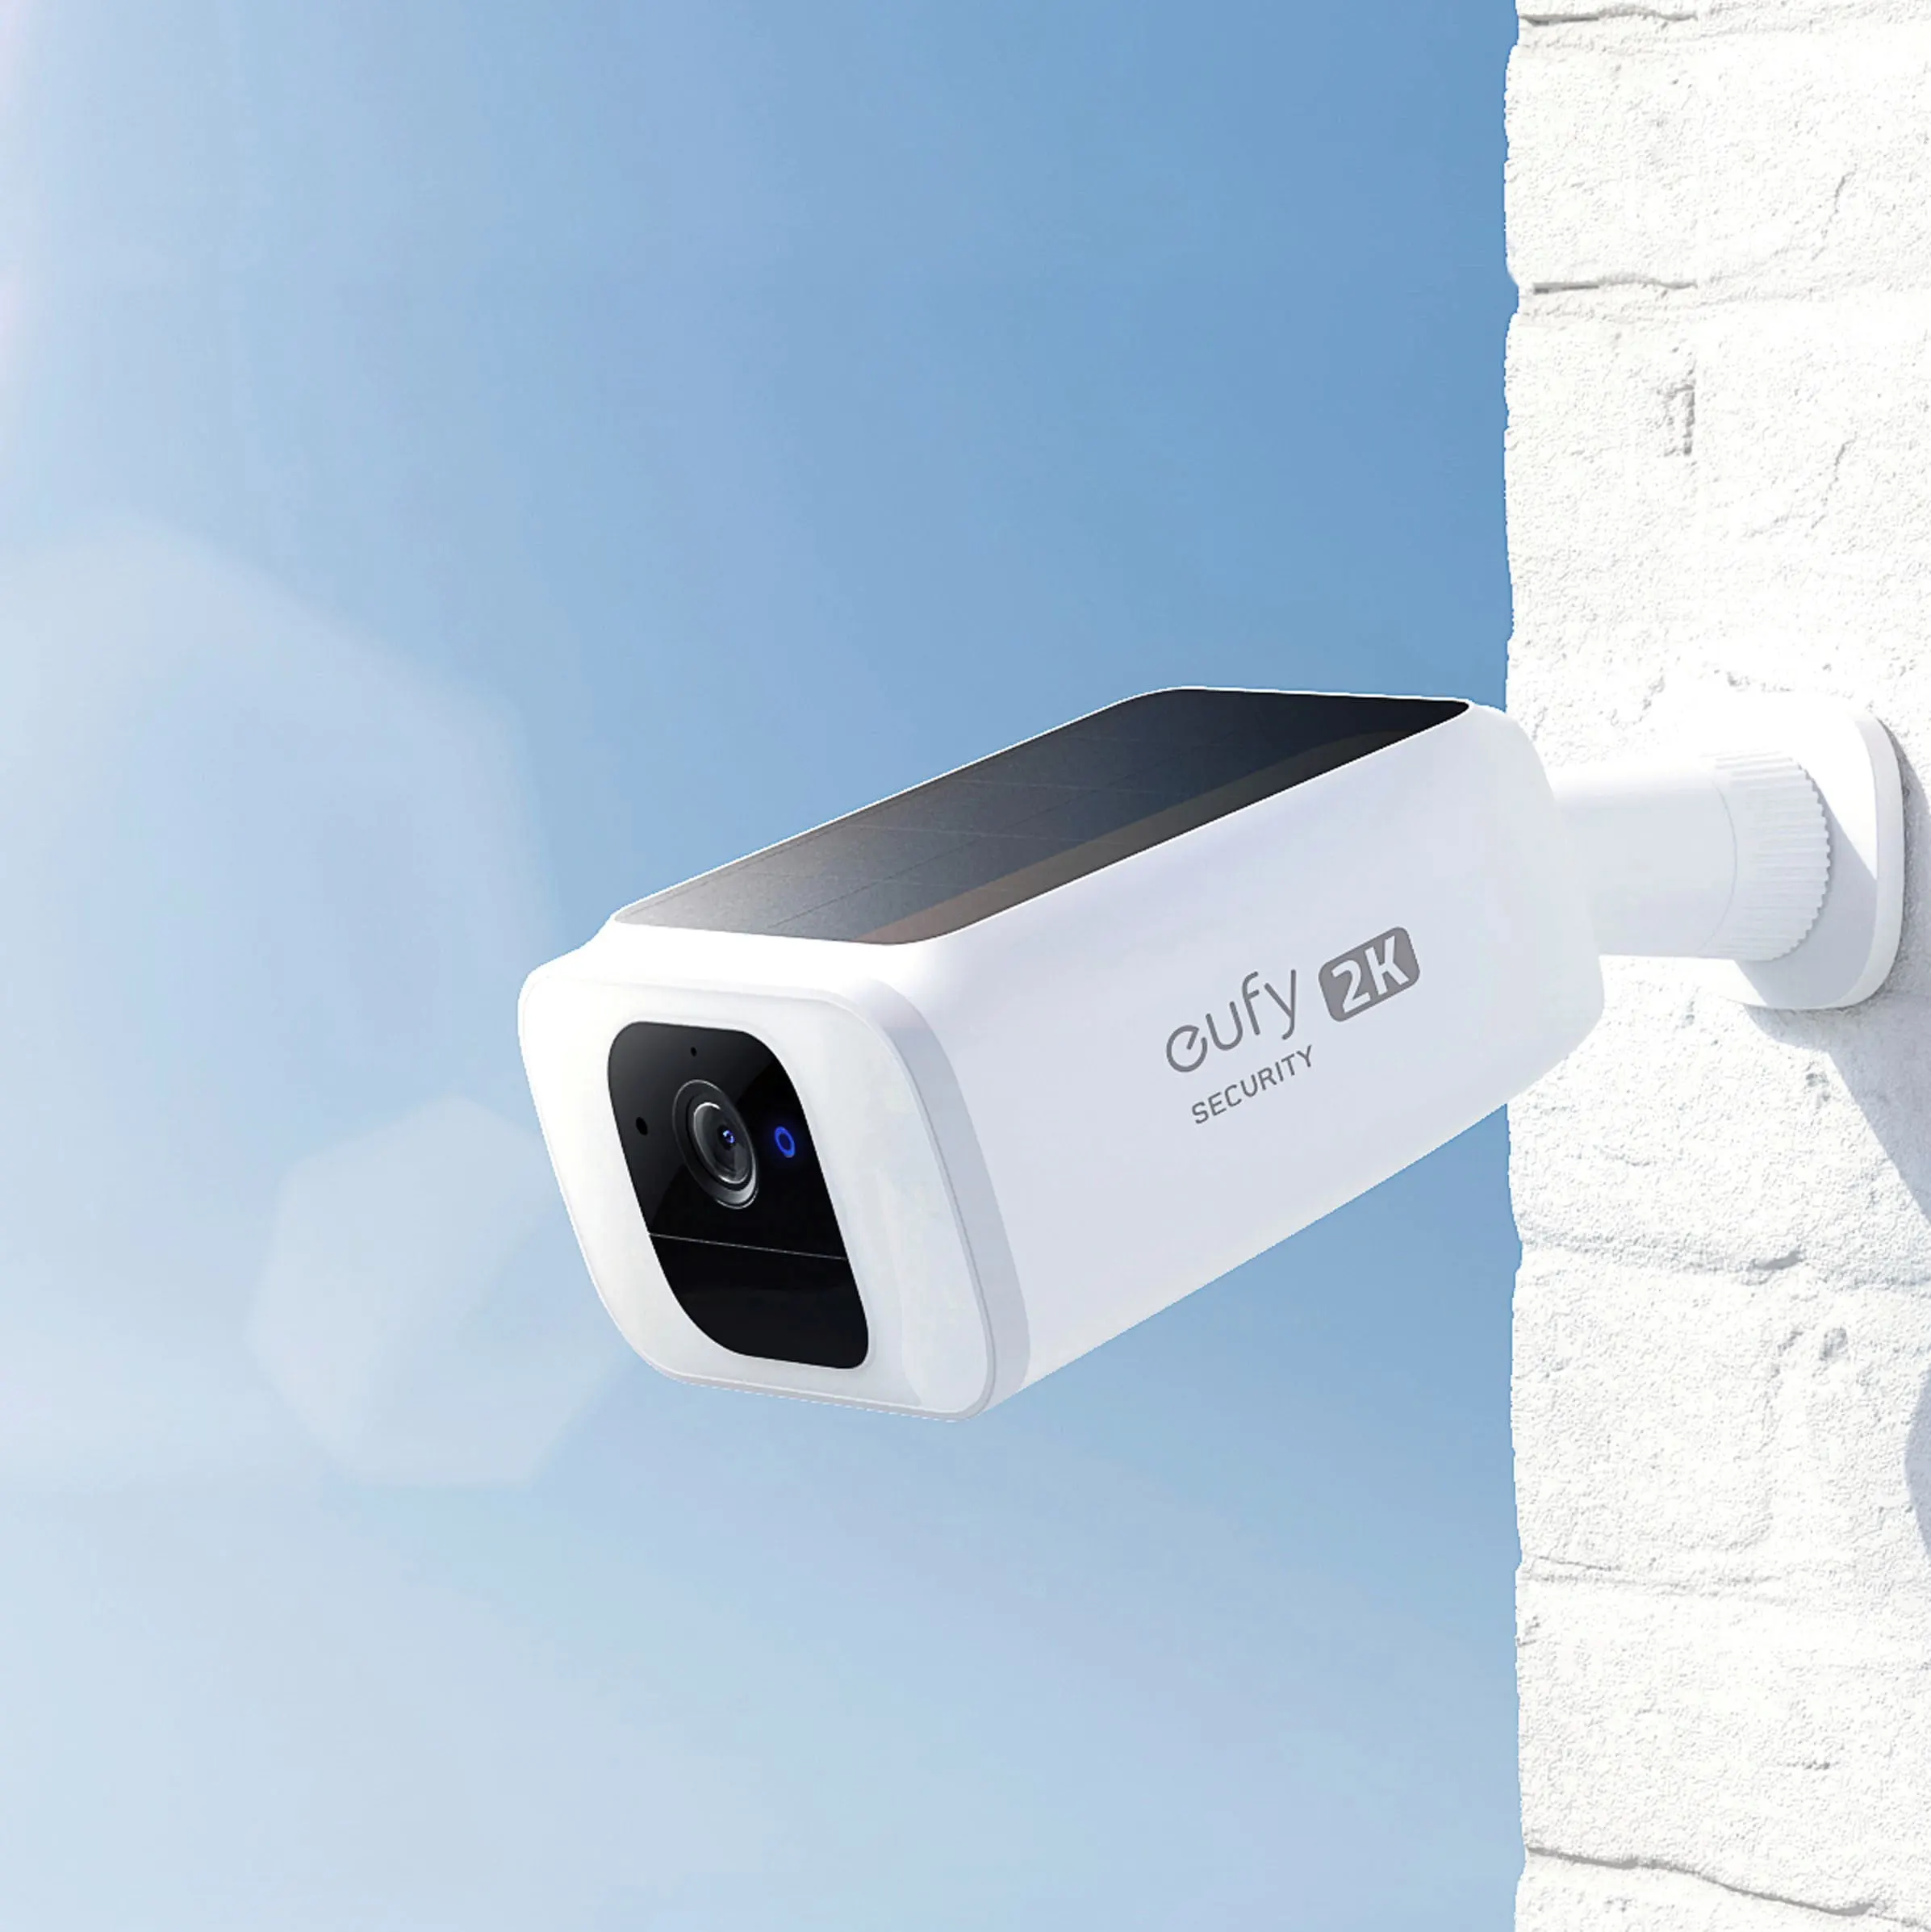 Eufy Solocam S40 security camera, 2k resolution, 8GB, T81243W1, white